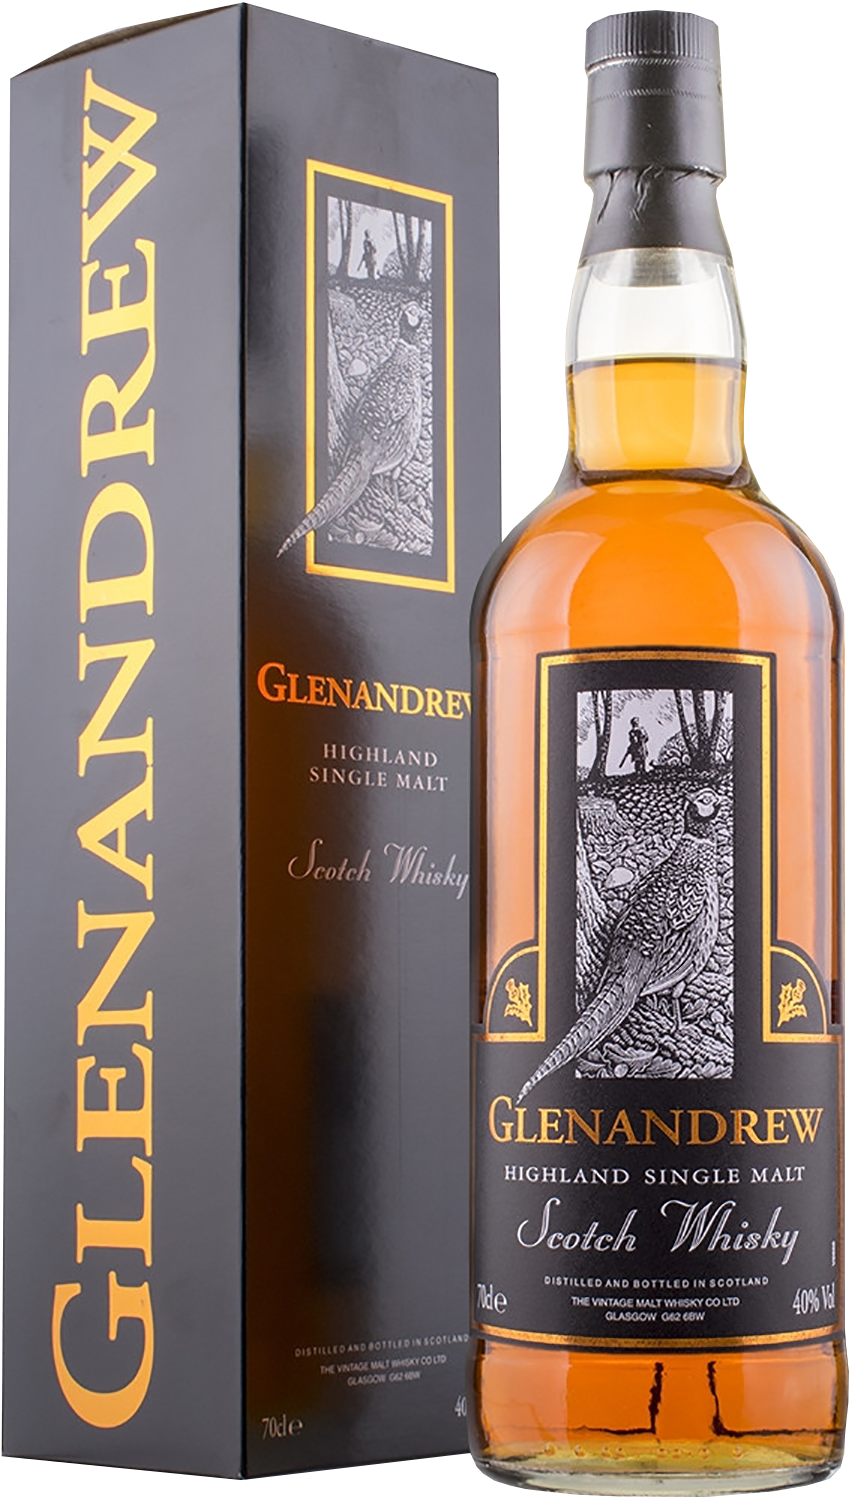 kavalan distillery select 2 single malt whisky gift box Glenandrew Highland Single Malt Scotch Whisky (gift box)